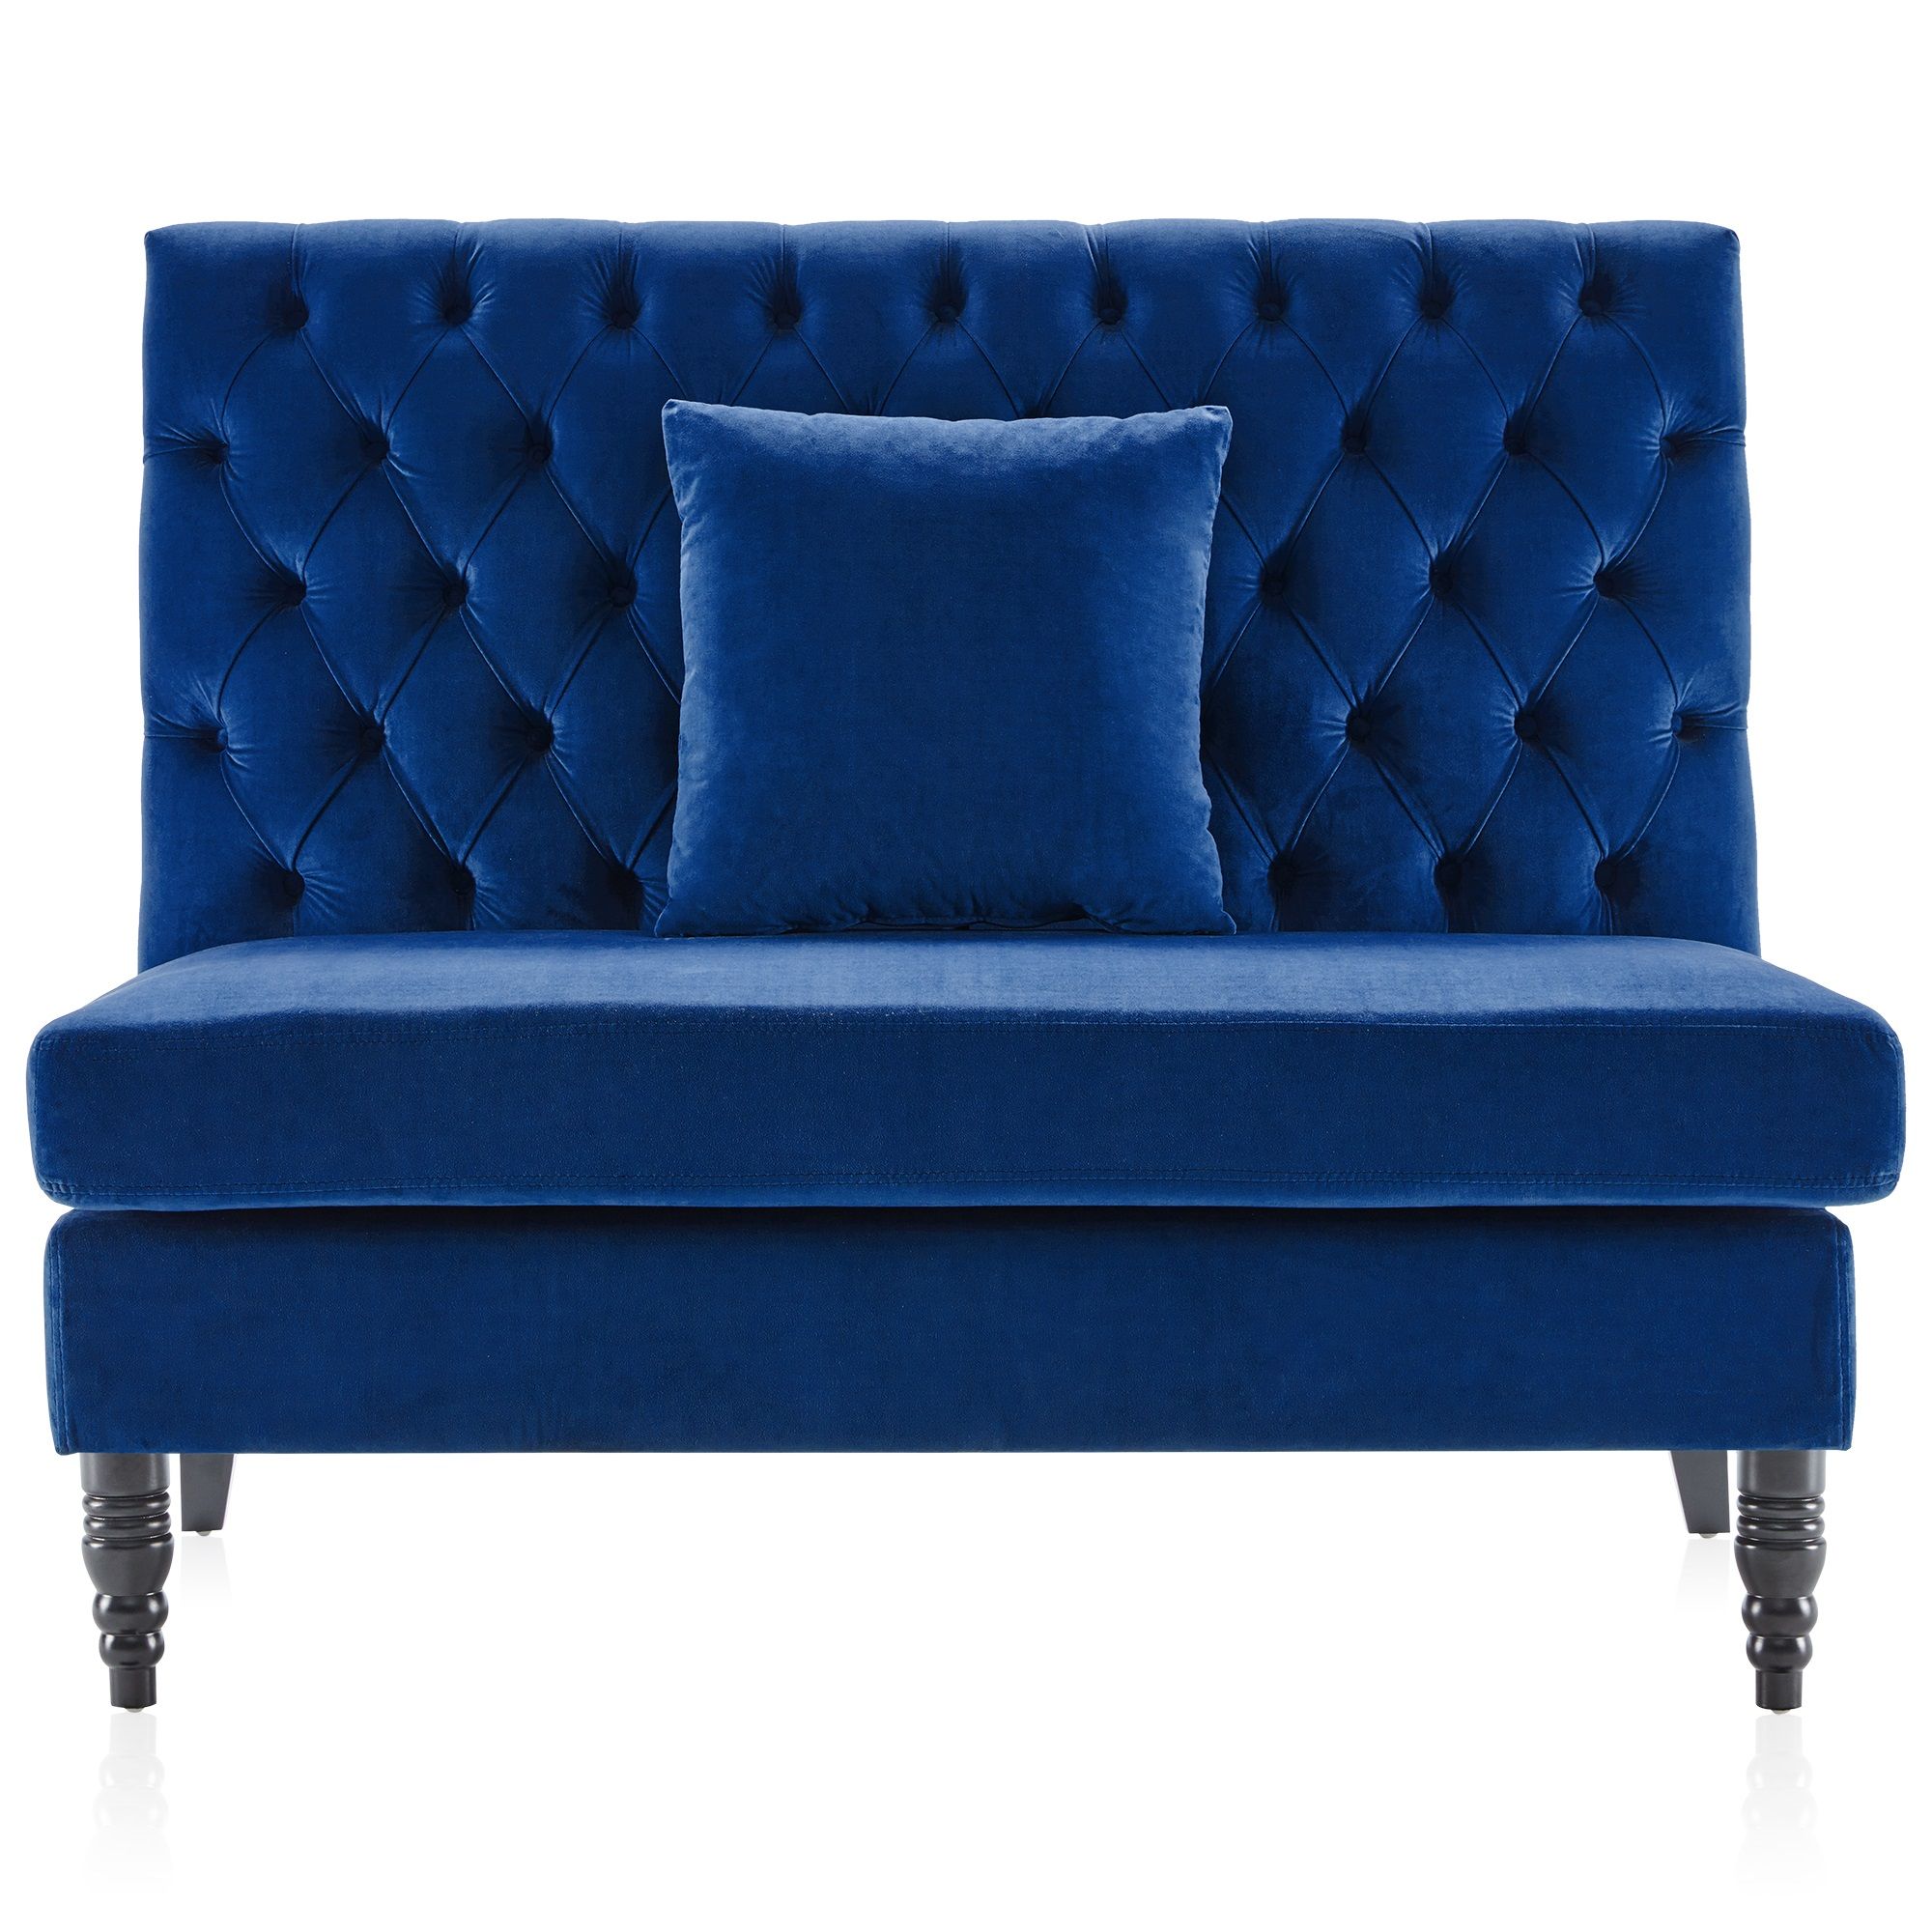 Velvet Modern Tufted Settee Bench Bedroom Sofa High Back Love Seat | Ebay With Regard To Small Love Seats In Velvet (Gallery 10 of 21)